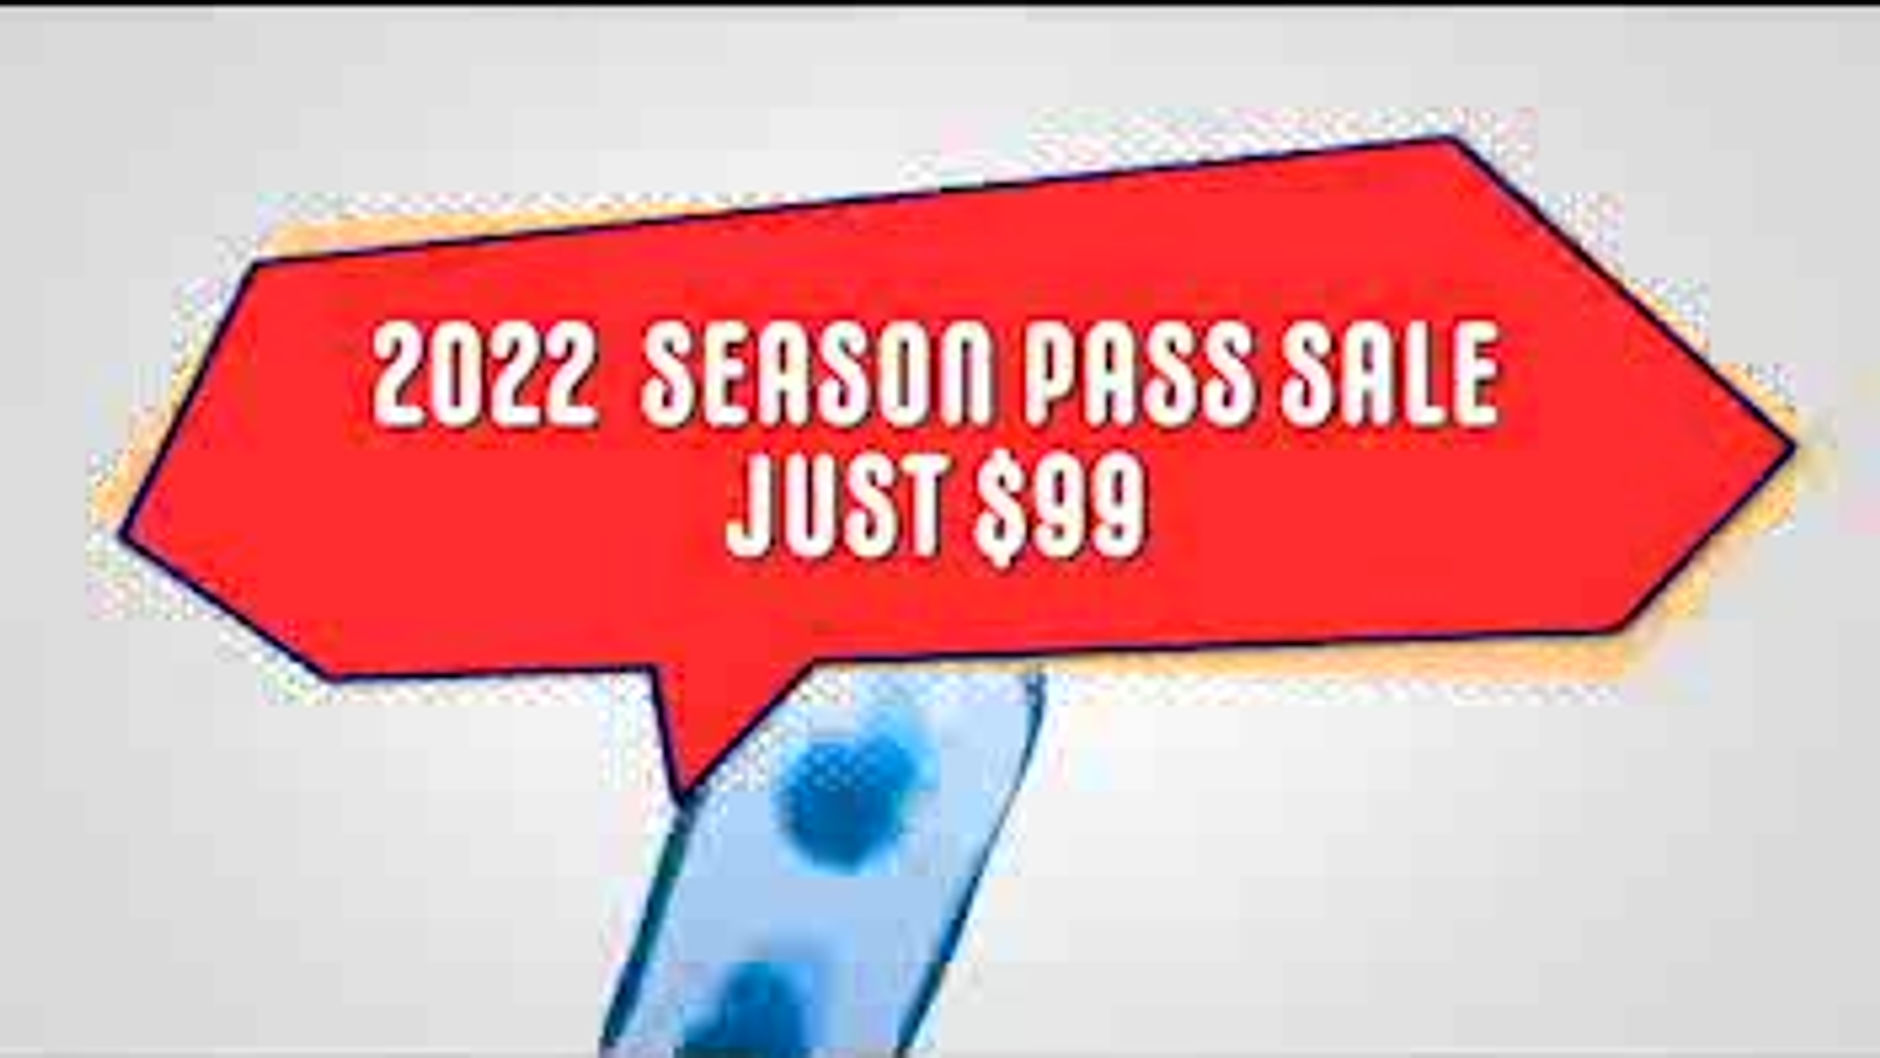 Knights Season Pass Sale 073021 15 sec. version